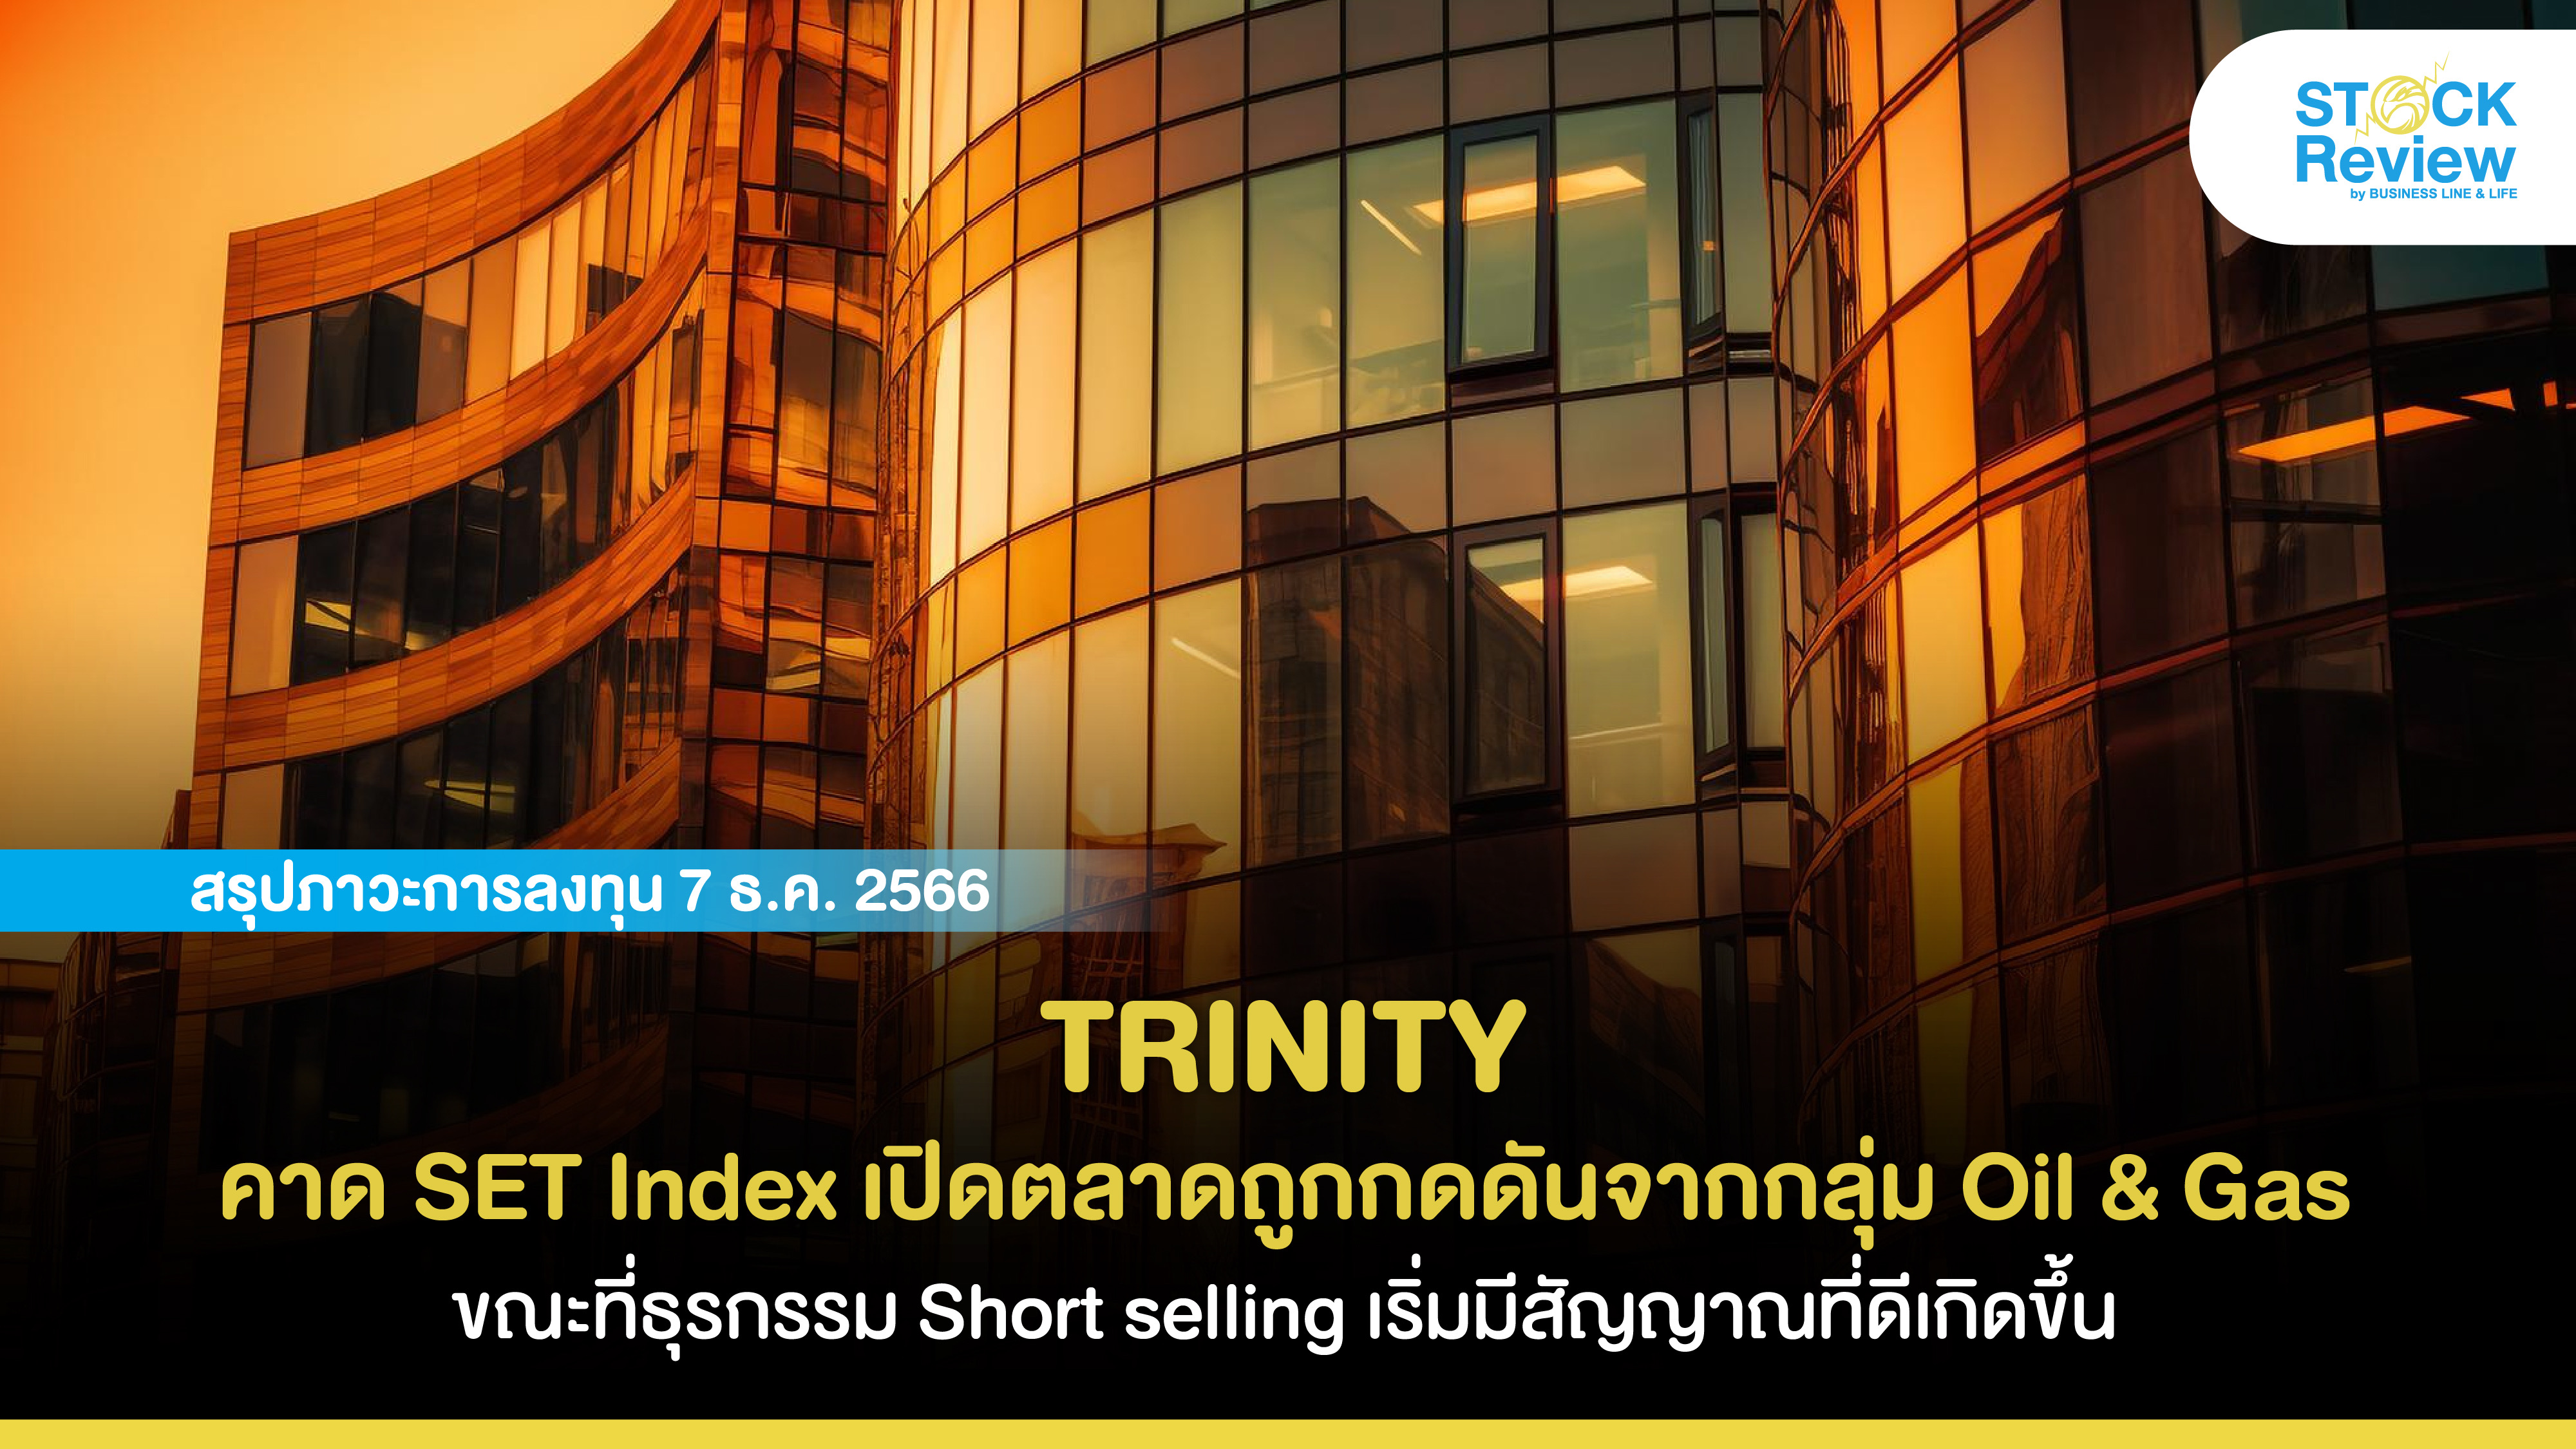 TRINITY คาด SET Index เปิดตลาดถูกกดดันจากกลุ่ม Oil & Gas ขณะที่ธุรกรรม Short selling เริ่มมีสัญญาณที่ดีขึ้น